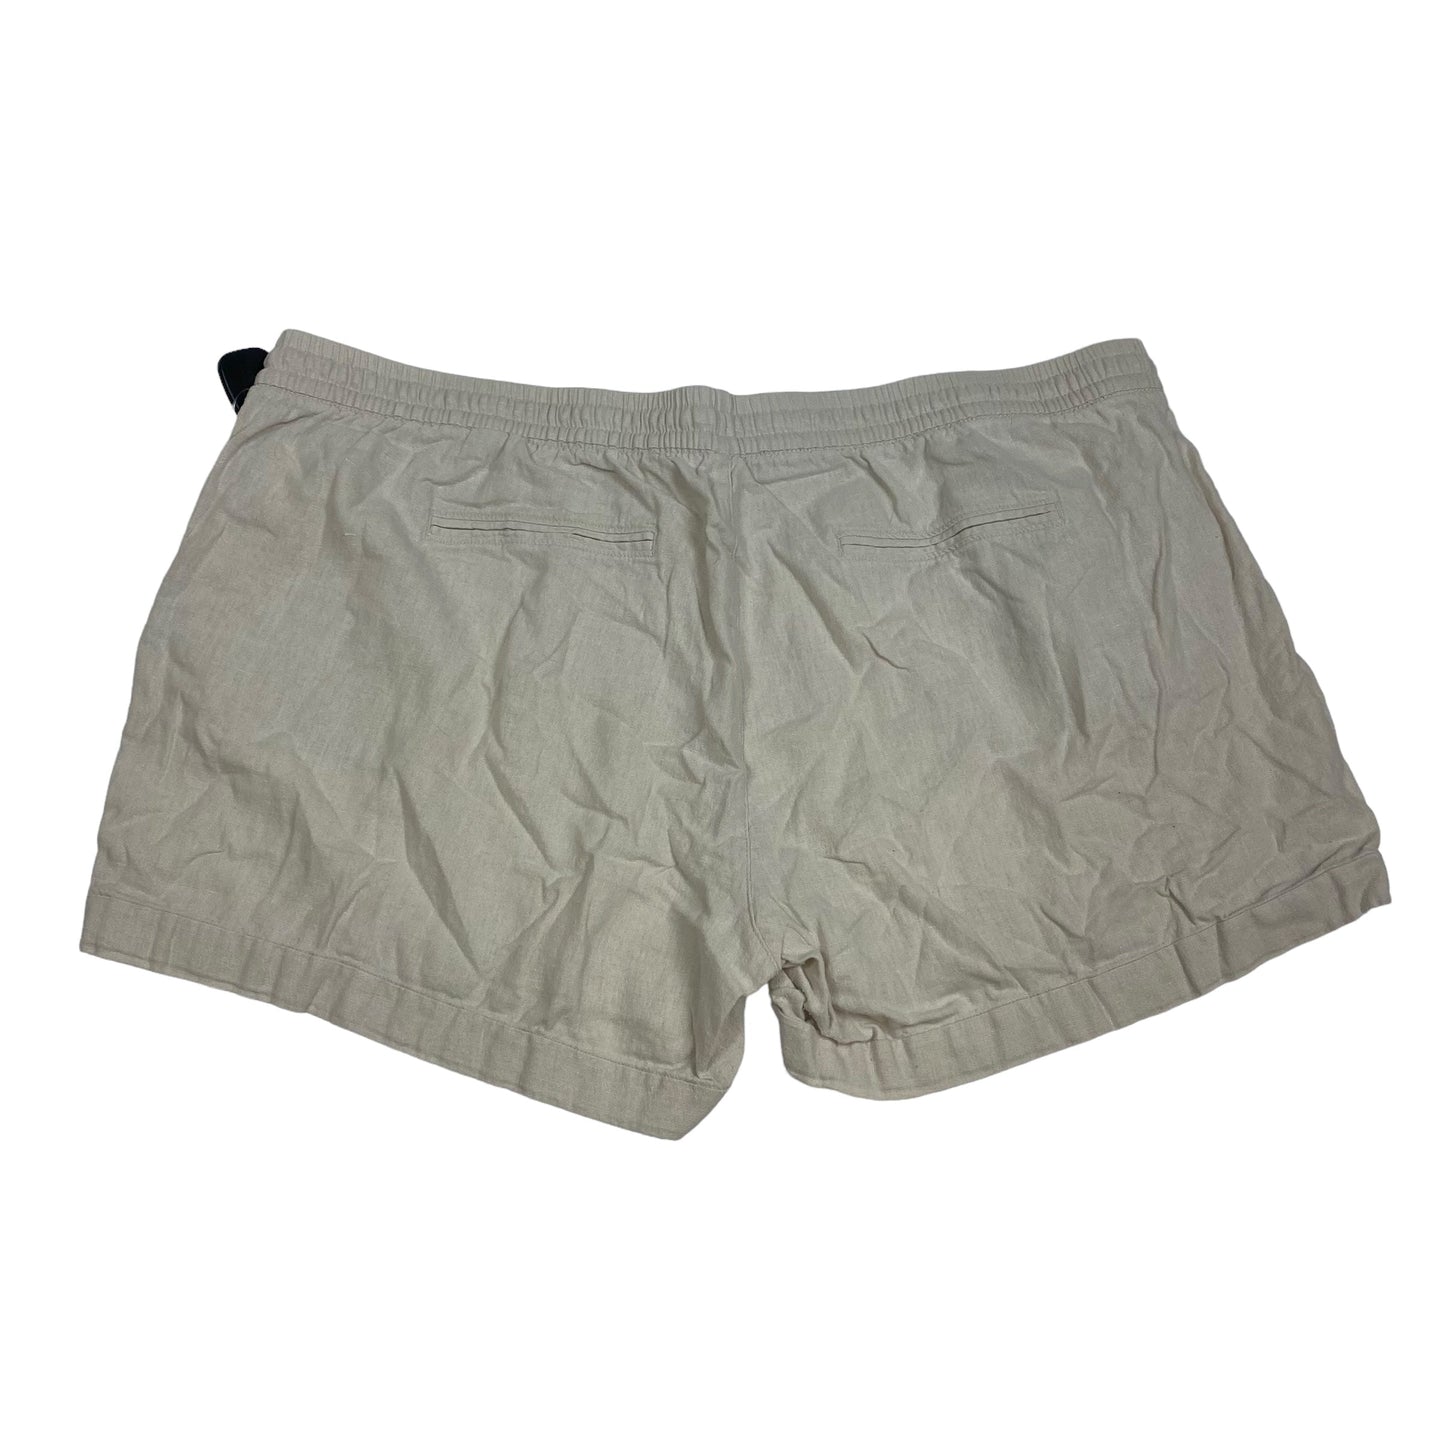 Cream Shorts Old Navy, Size Xxl